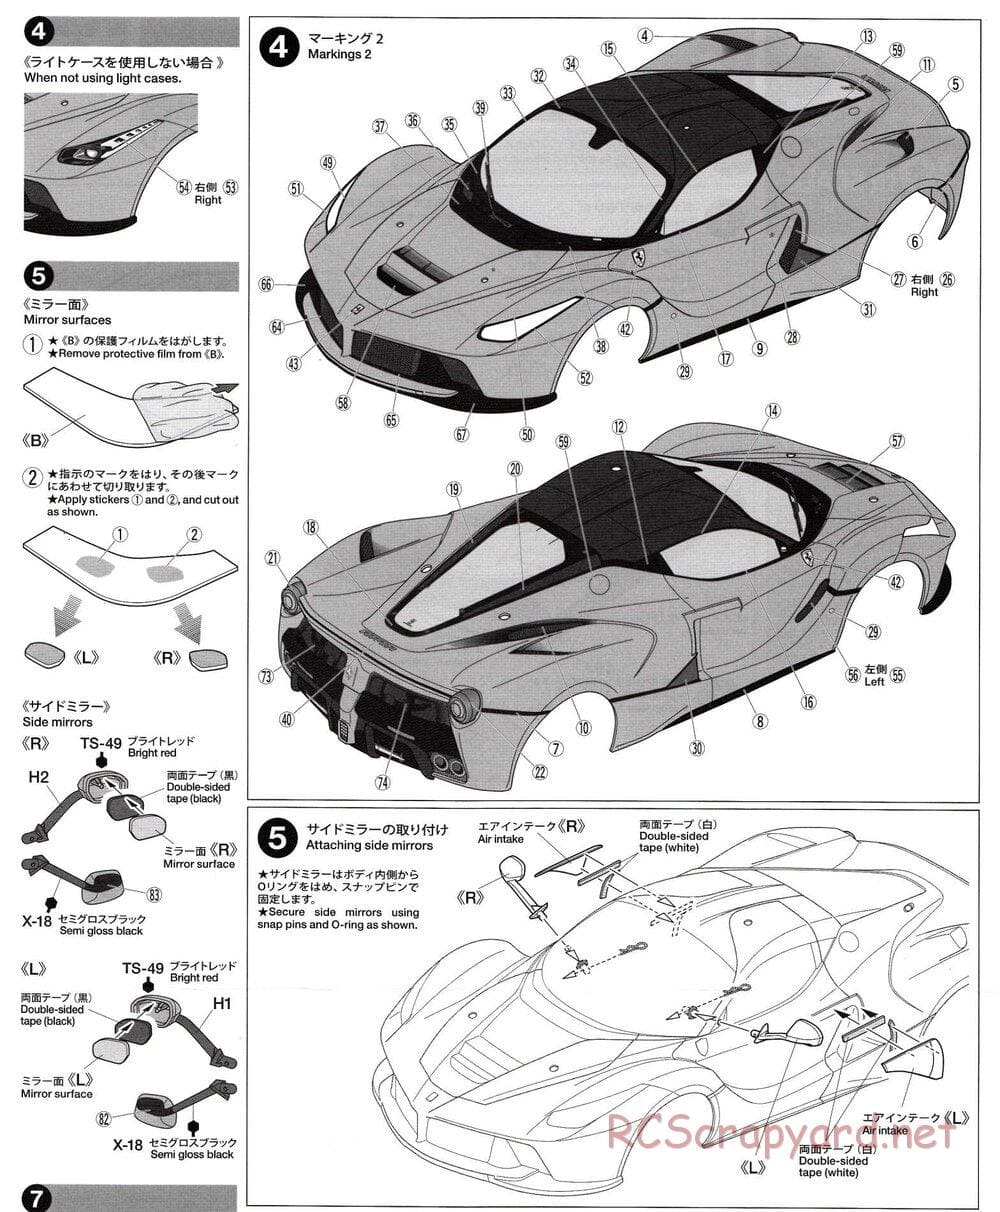 Tamiya - LaFerrari - TT-02 Chassis - Body Manual - Page 4